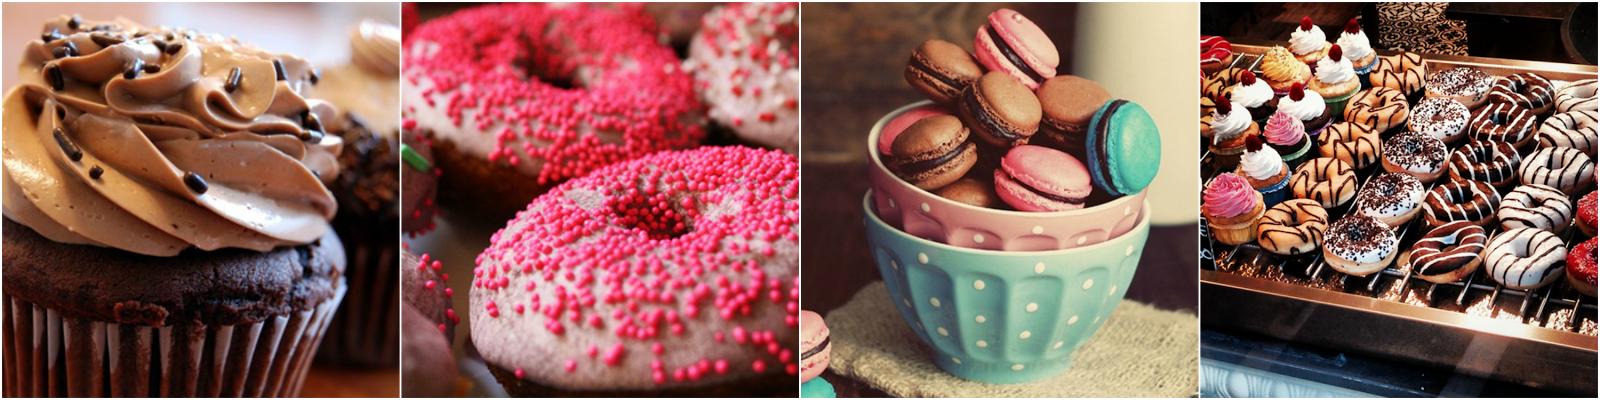 Crumbs & Cupcake | Cupcakes - Cakes - Meringues - Muffins - Donuts